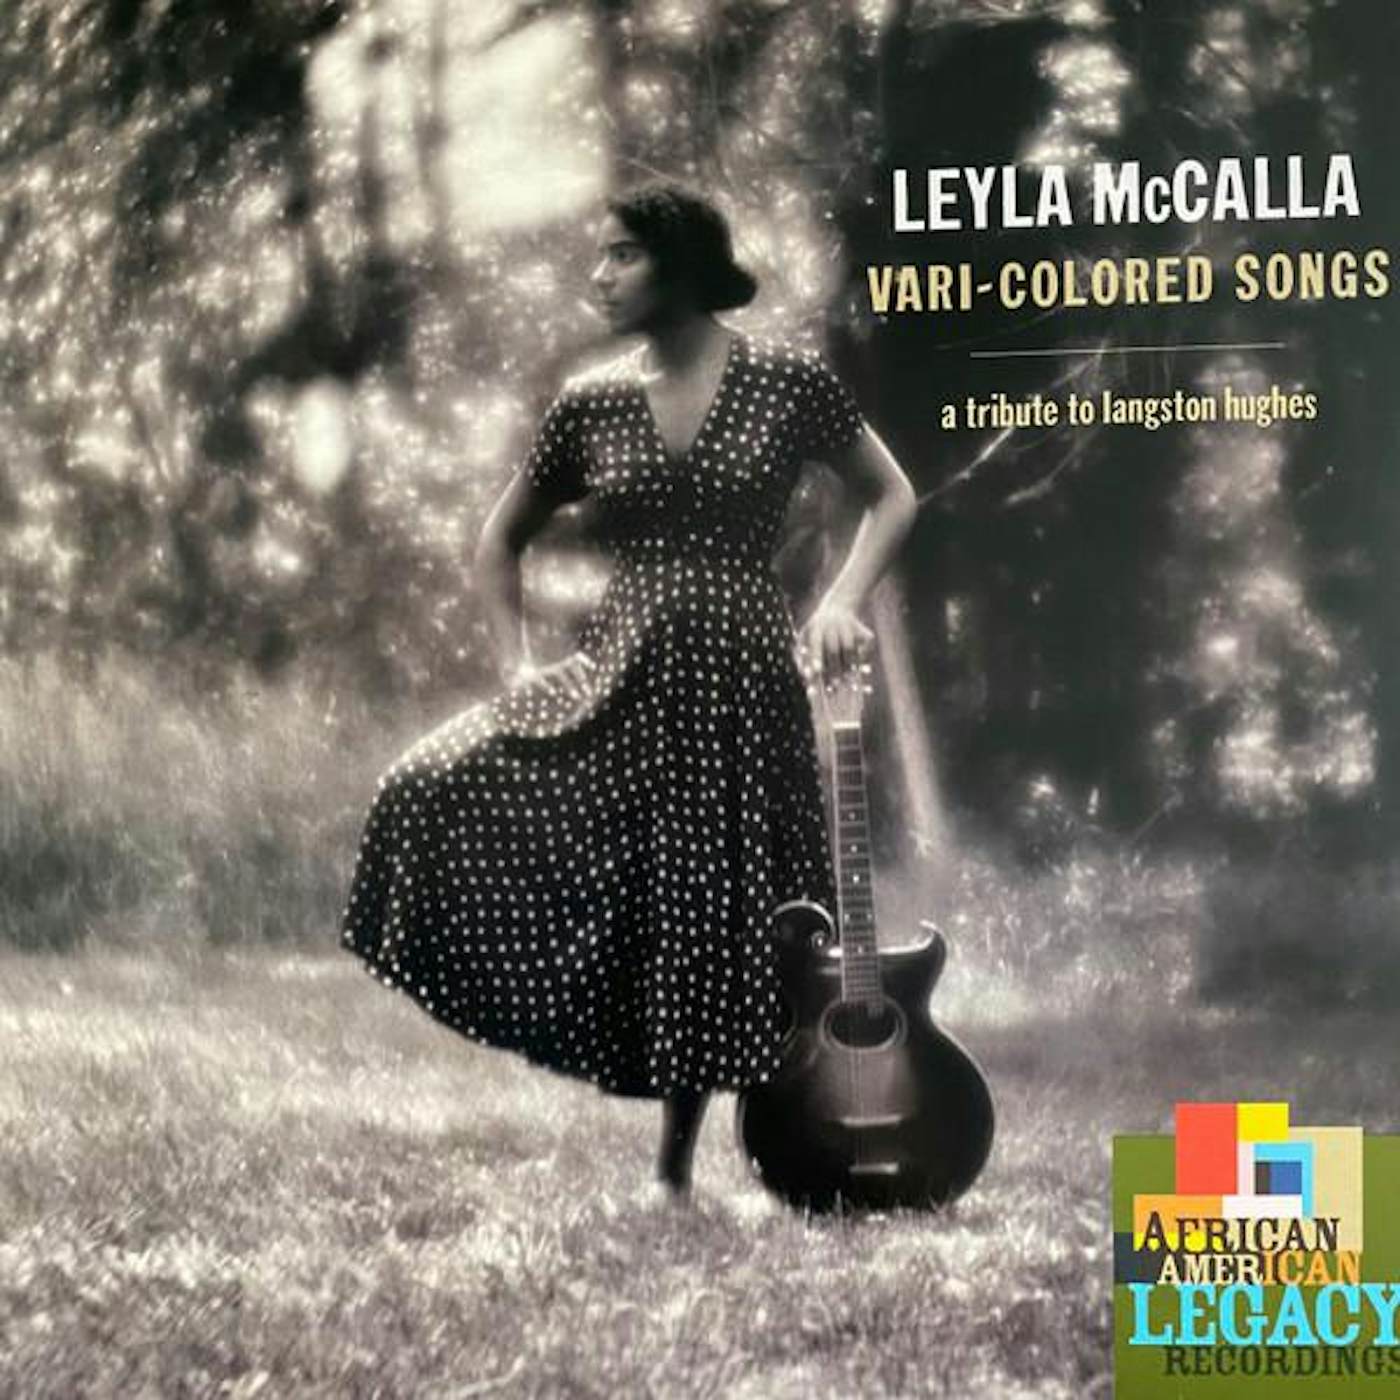 Leyla McCalla Vari-Colored Songs: a Tribute to Langston Hughes Vinyl Record